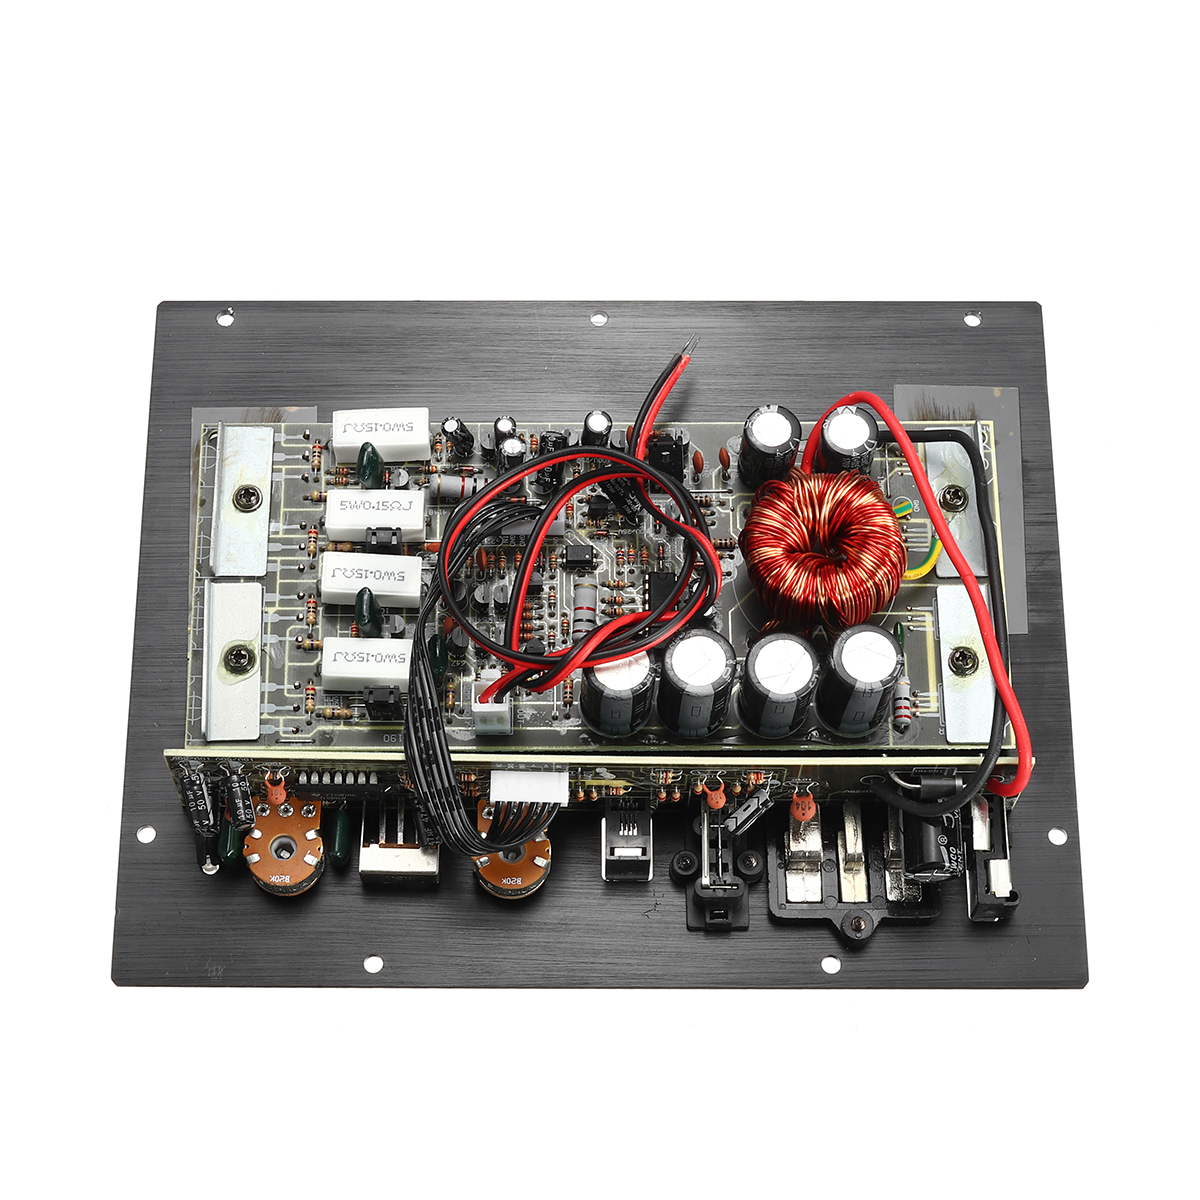 12V-1000W-Car-Audio-High-Power-Amplifier-Board-Powerful-Bass-1426077